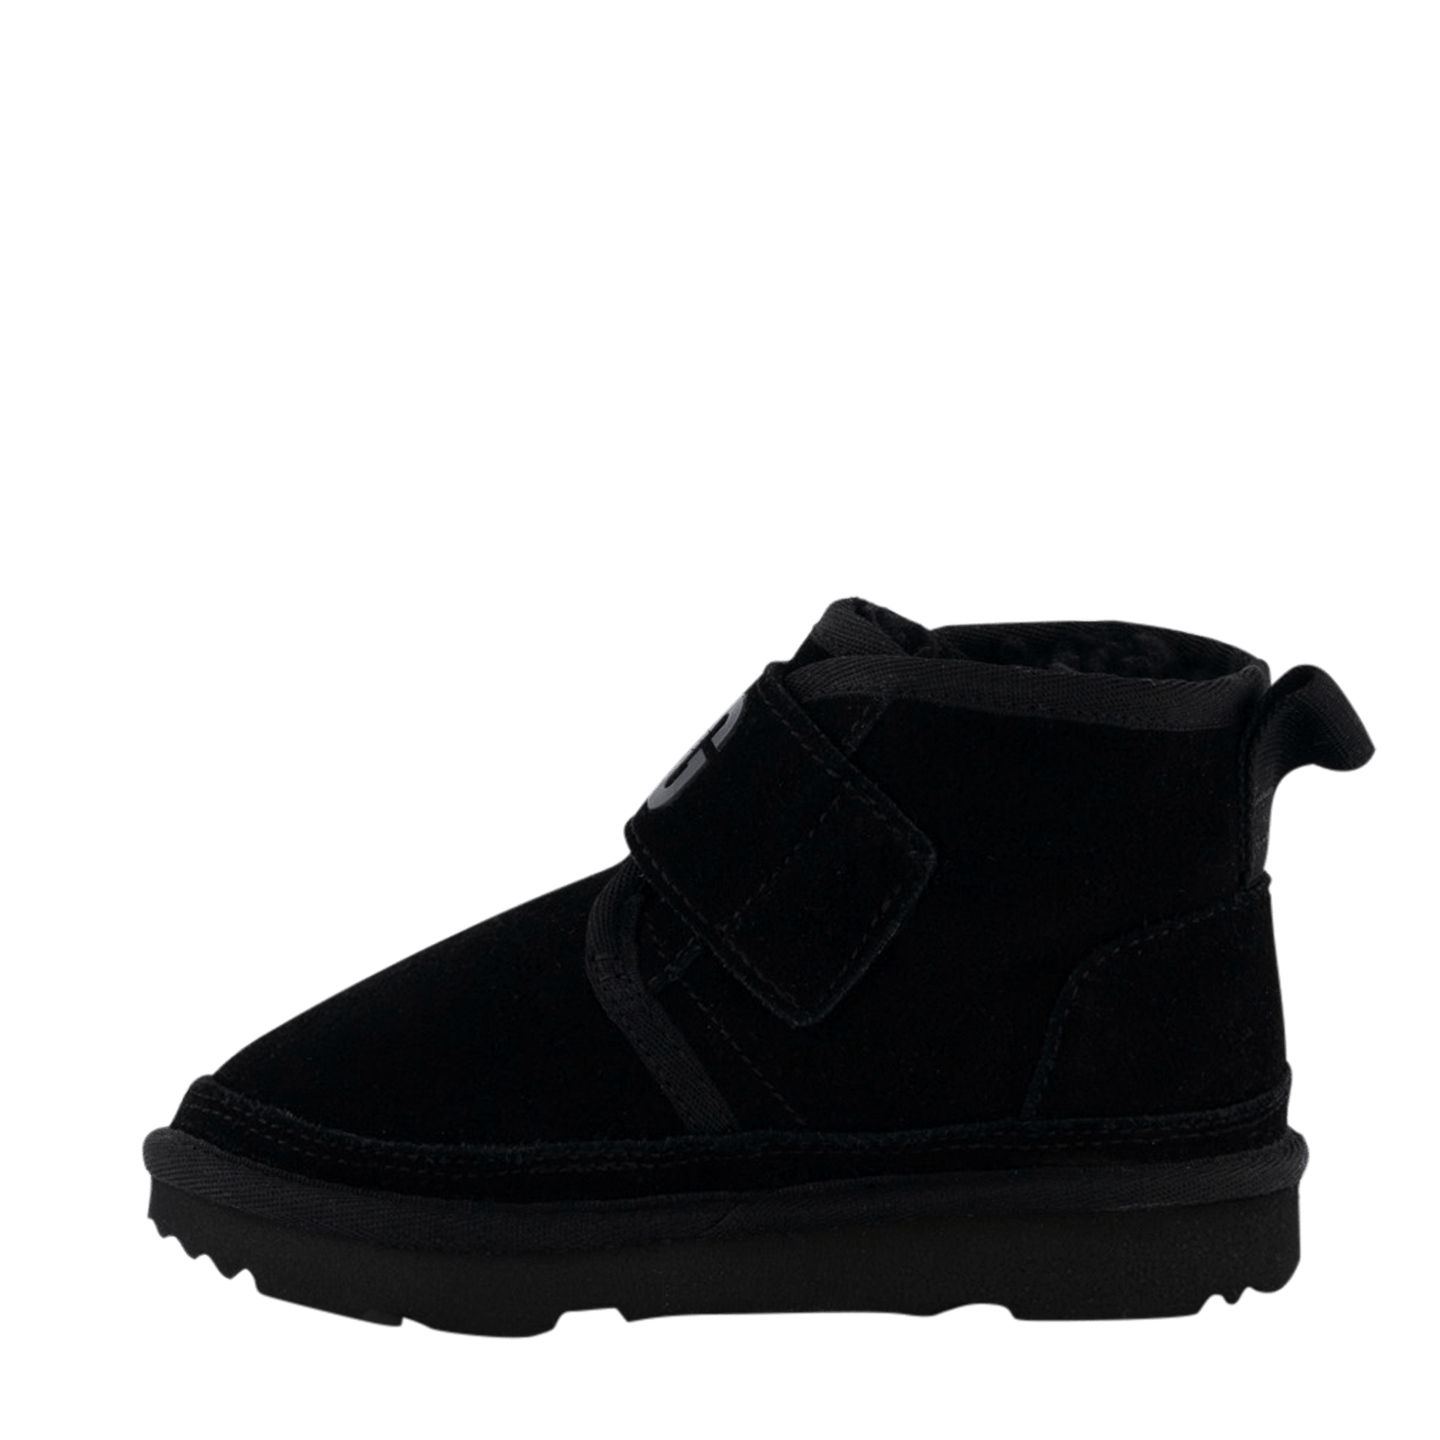 UGG Kinder Unisex Laarzen Zwart 22